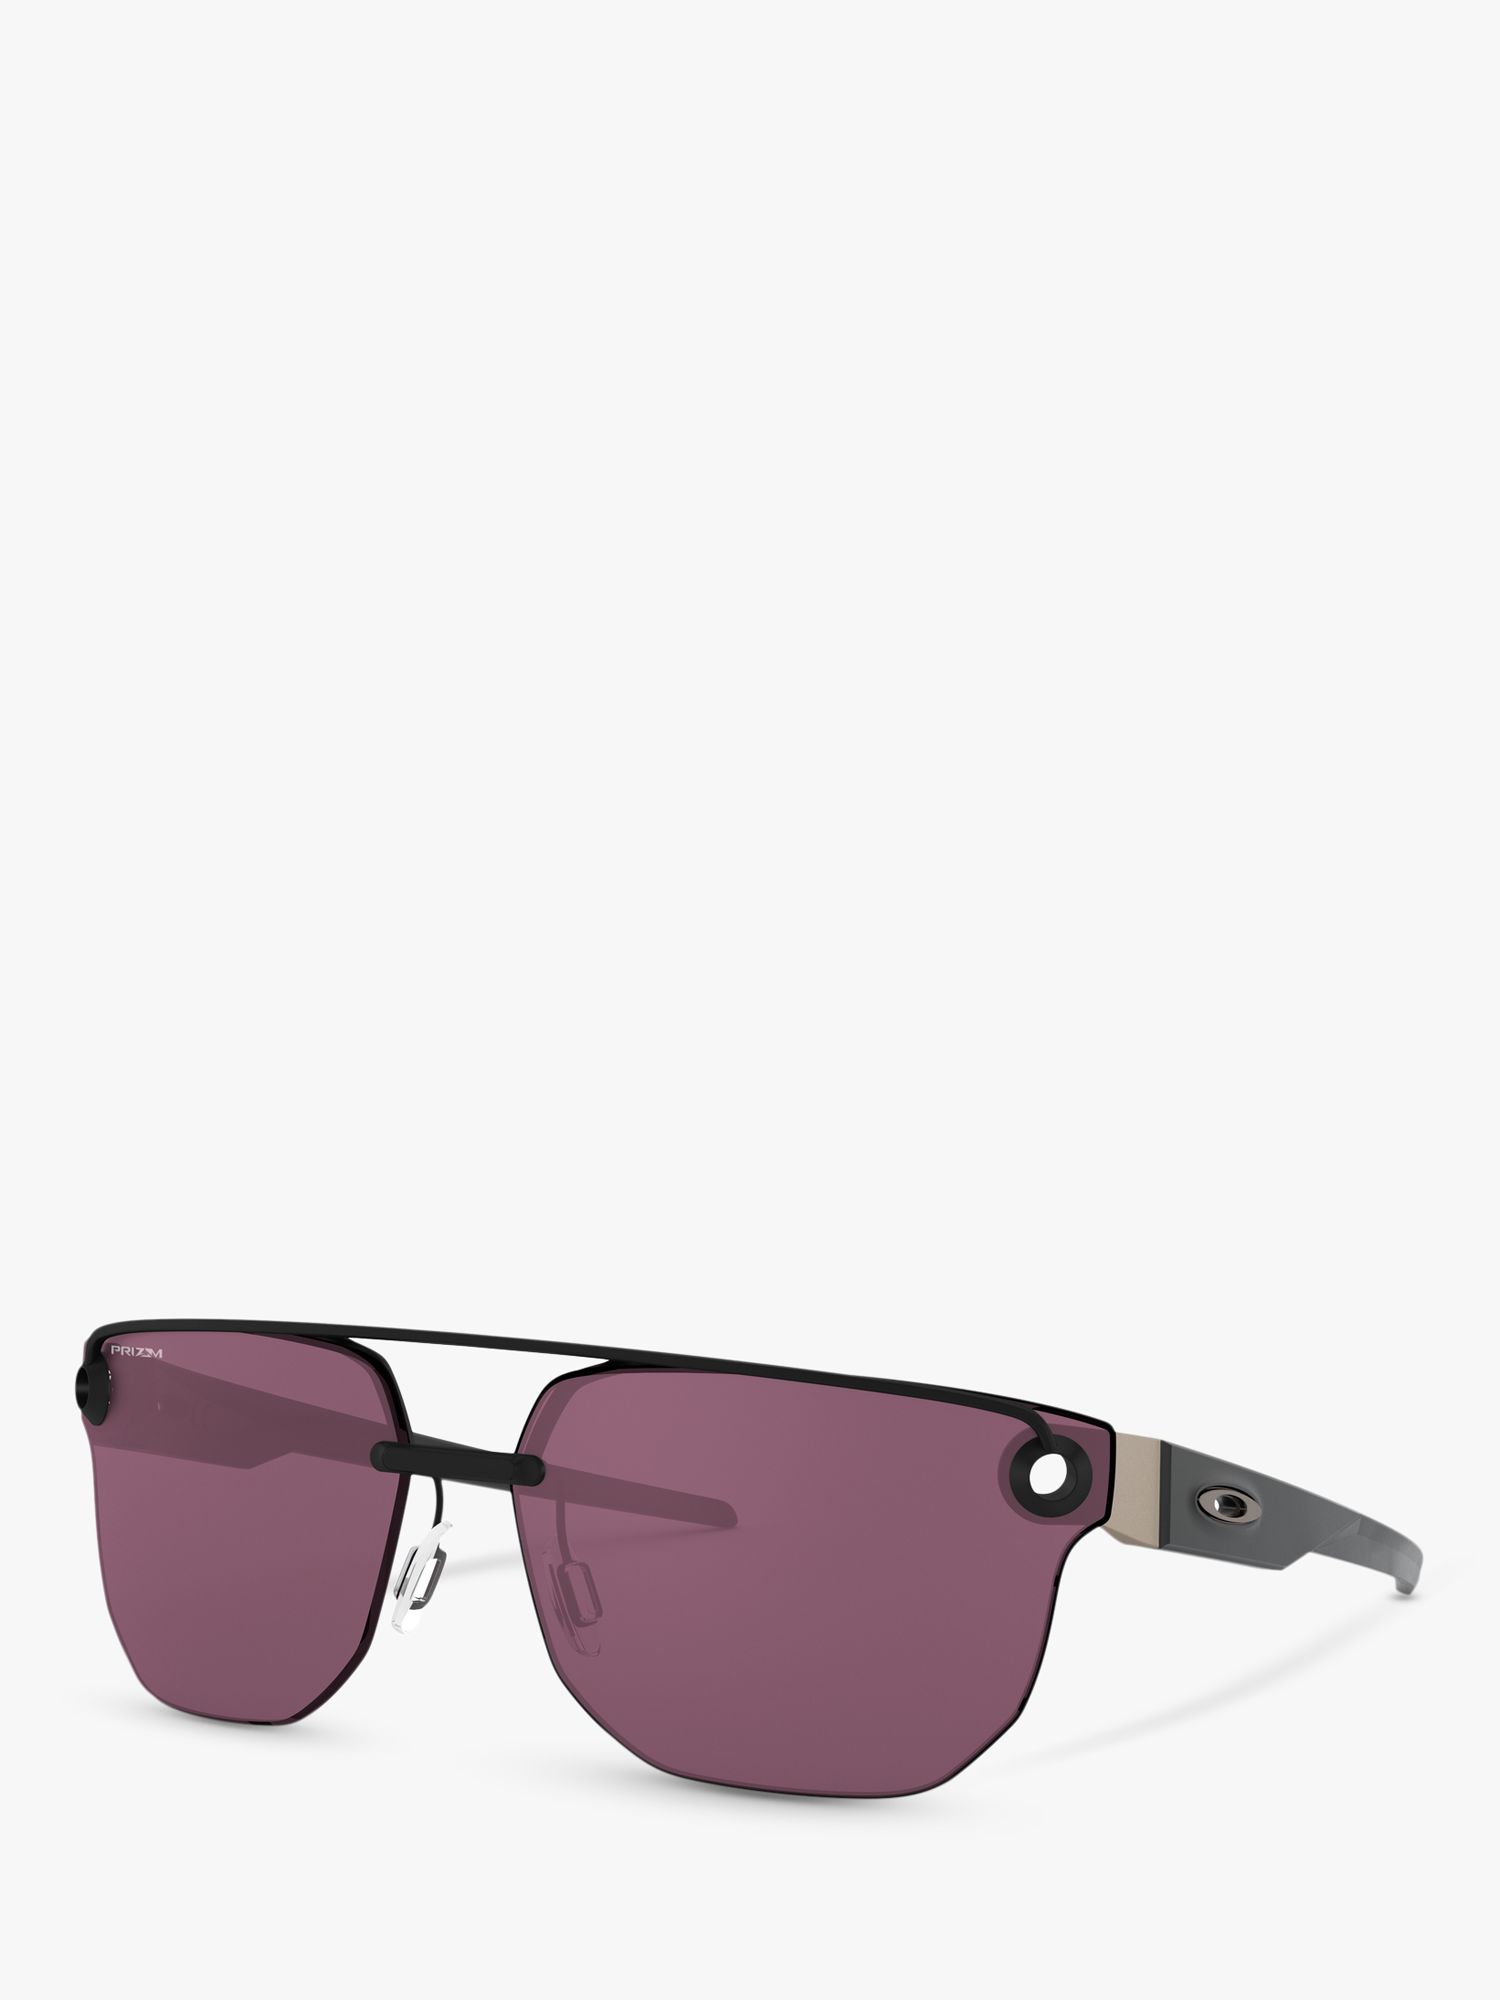 Oakley OO4136 Men's Chrystl Prizm Square Sunglasses, Black/Purple